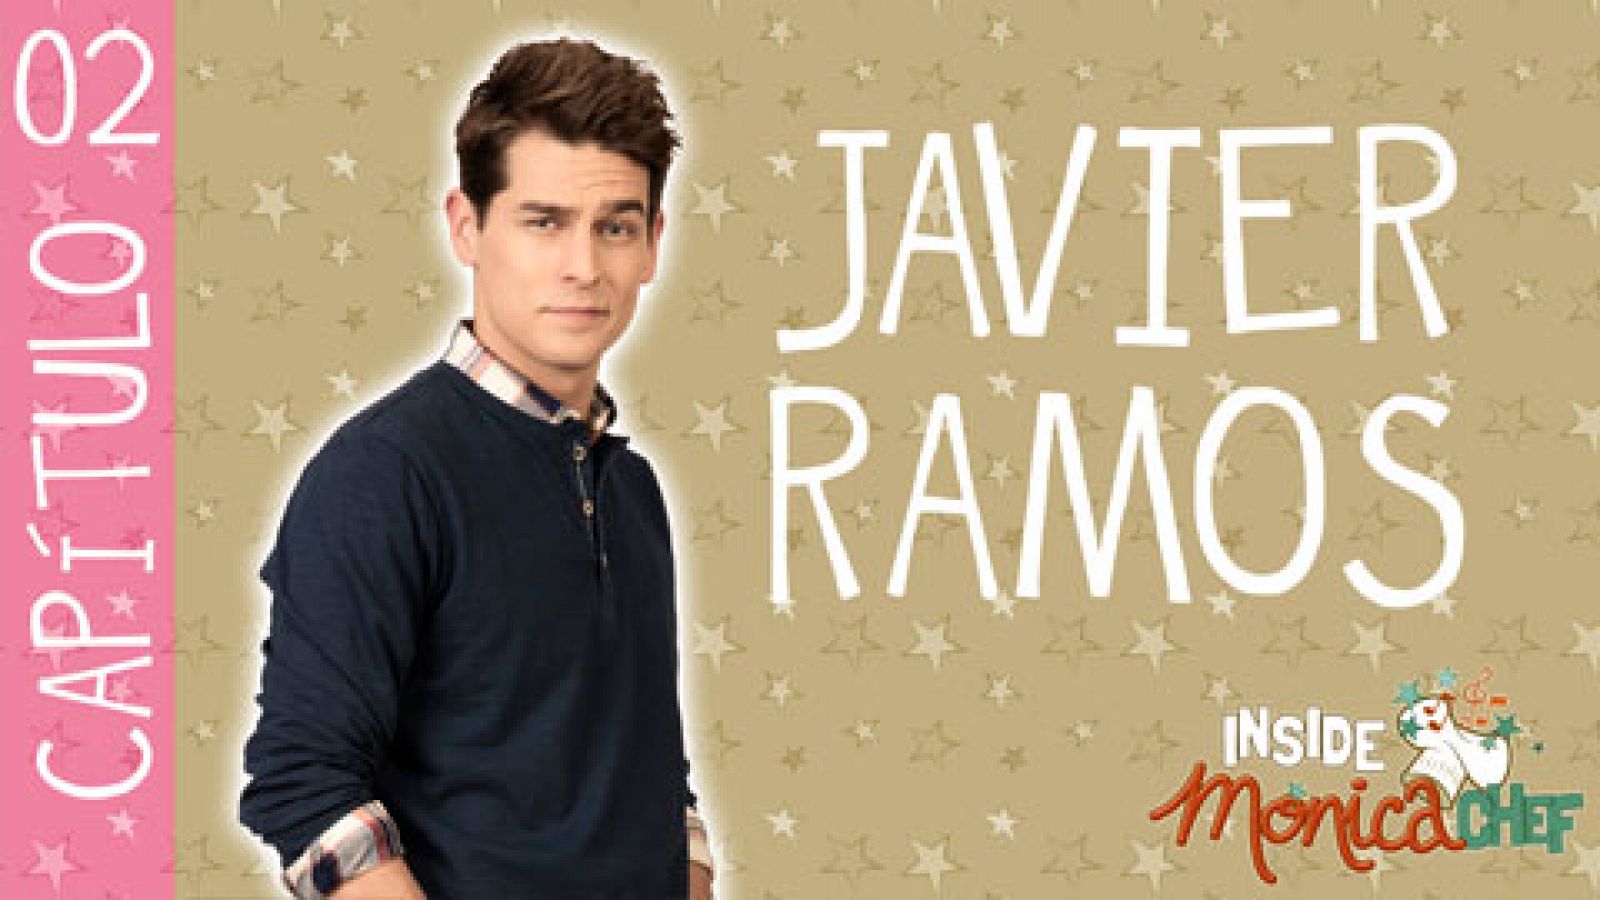 Sin programa: Inside Mónica Chef 2 - Javier Ramos | RTVE Play